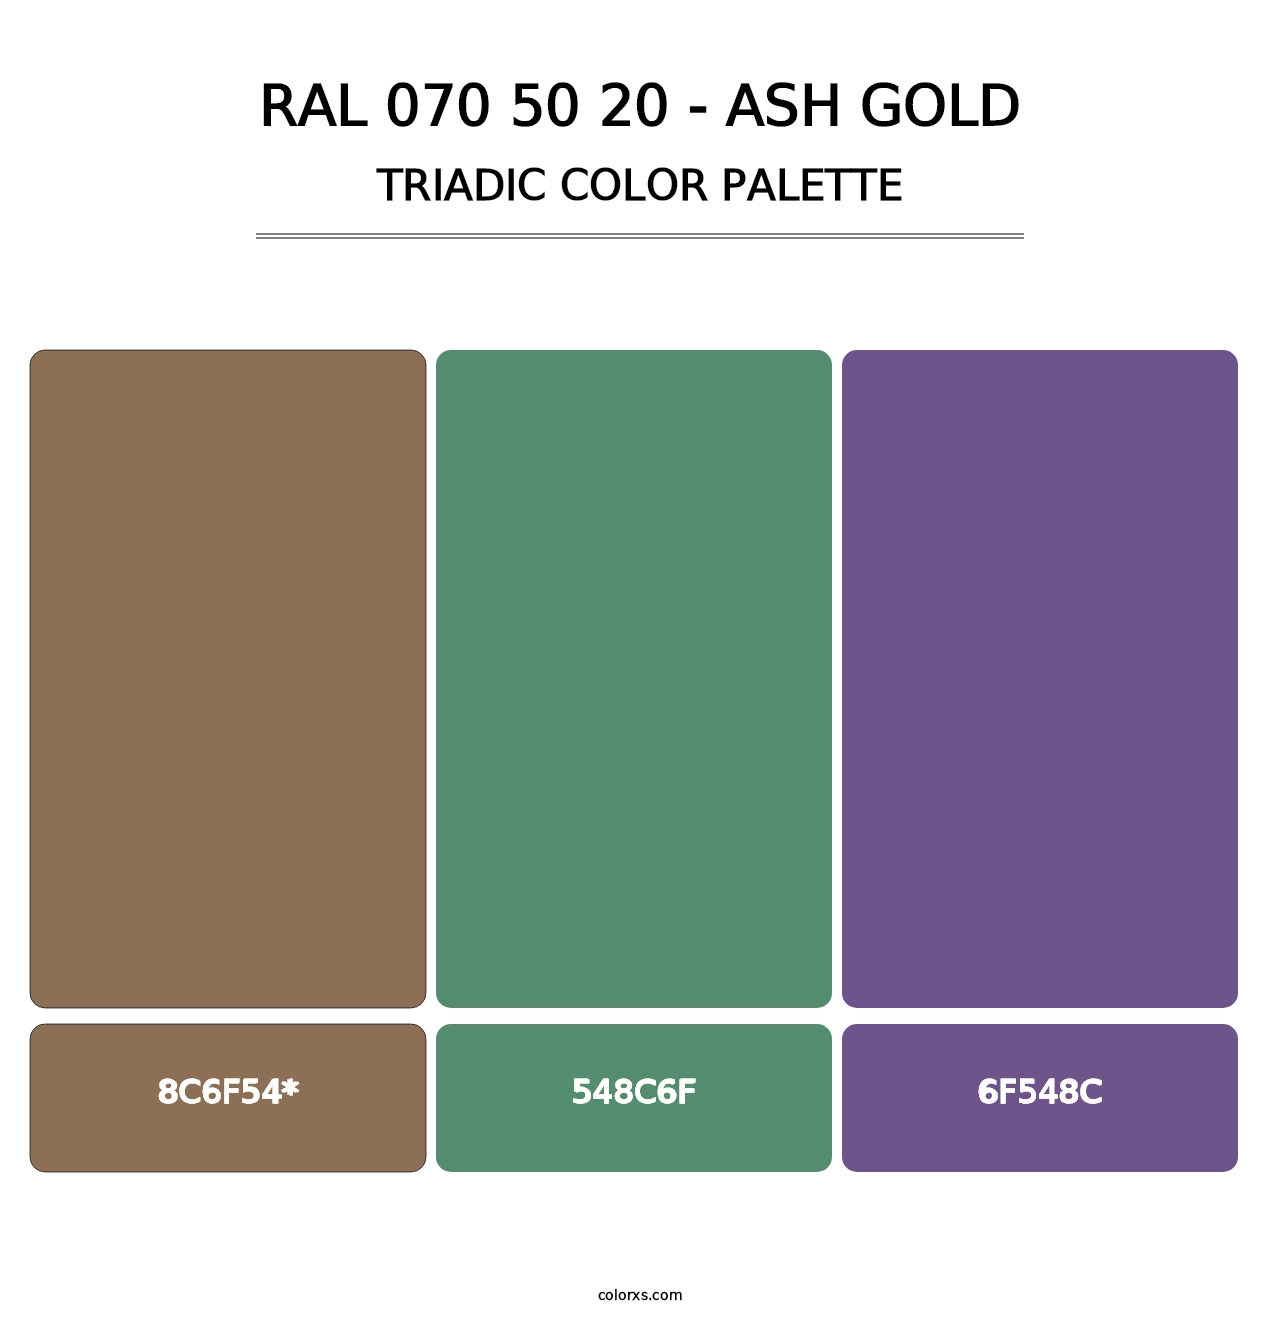 RAL 070 50 20 - Ash Gold - Triadic Color Palette